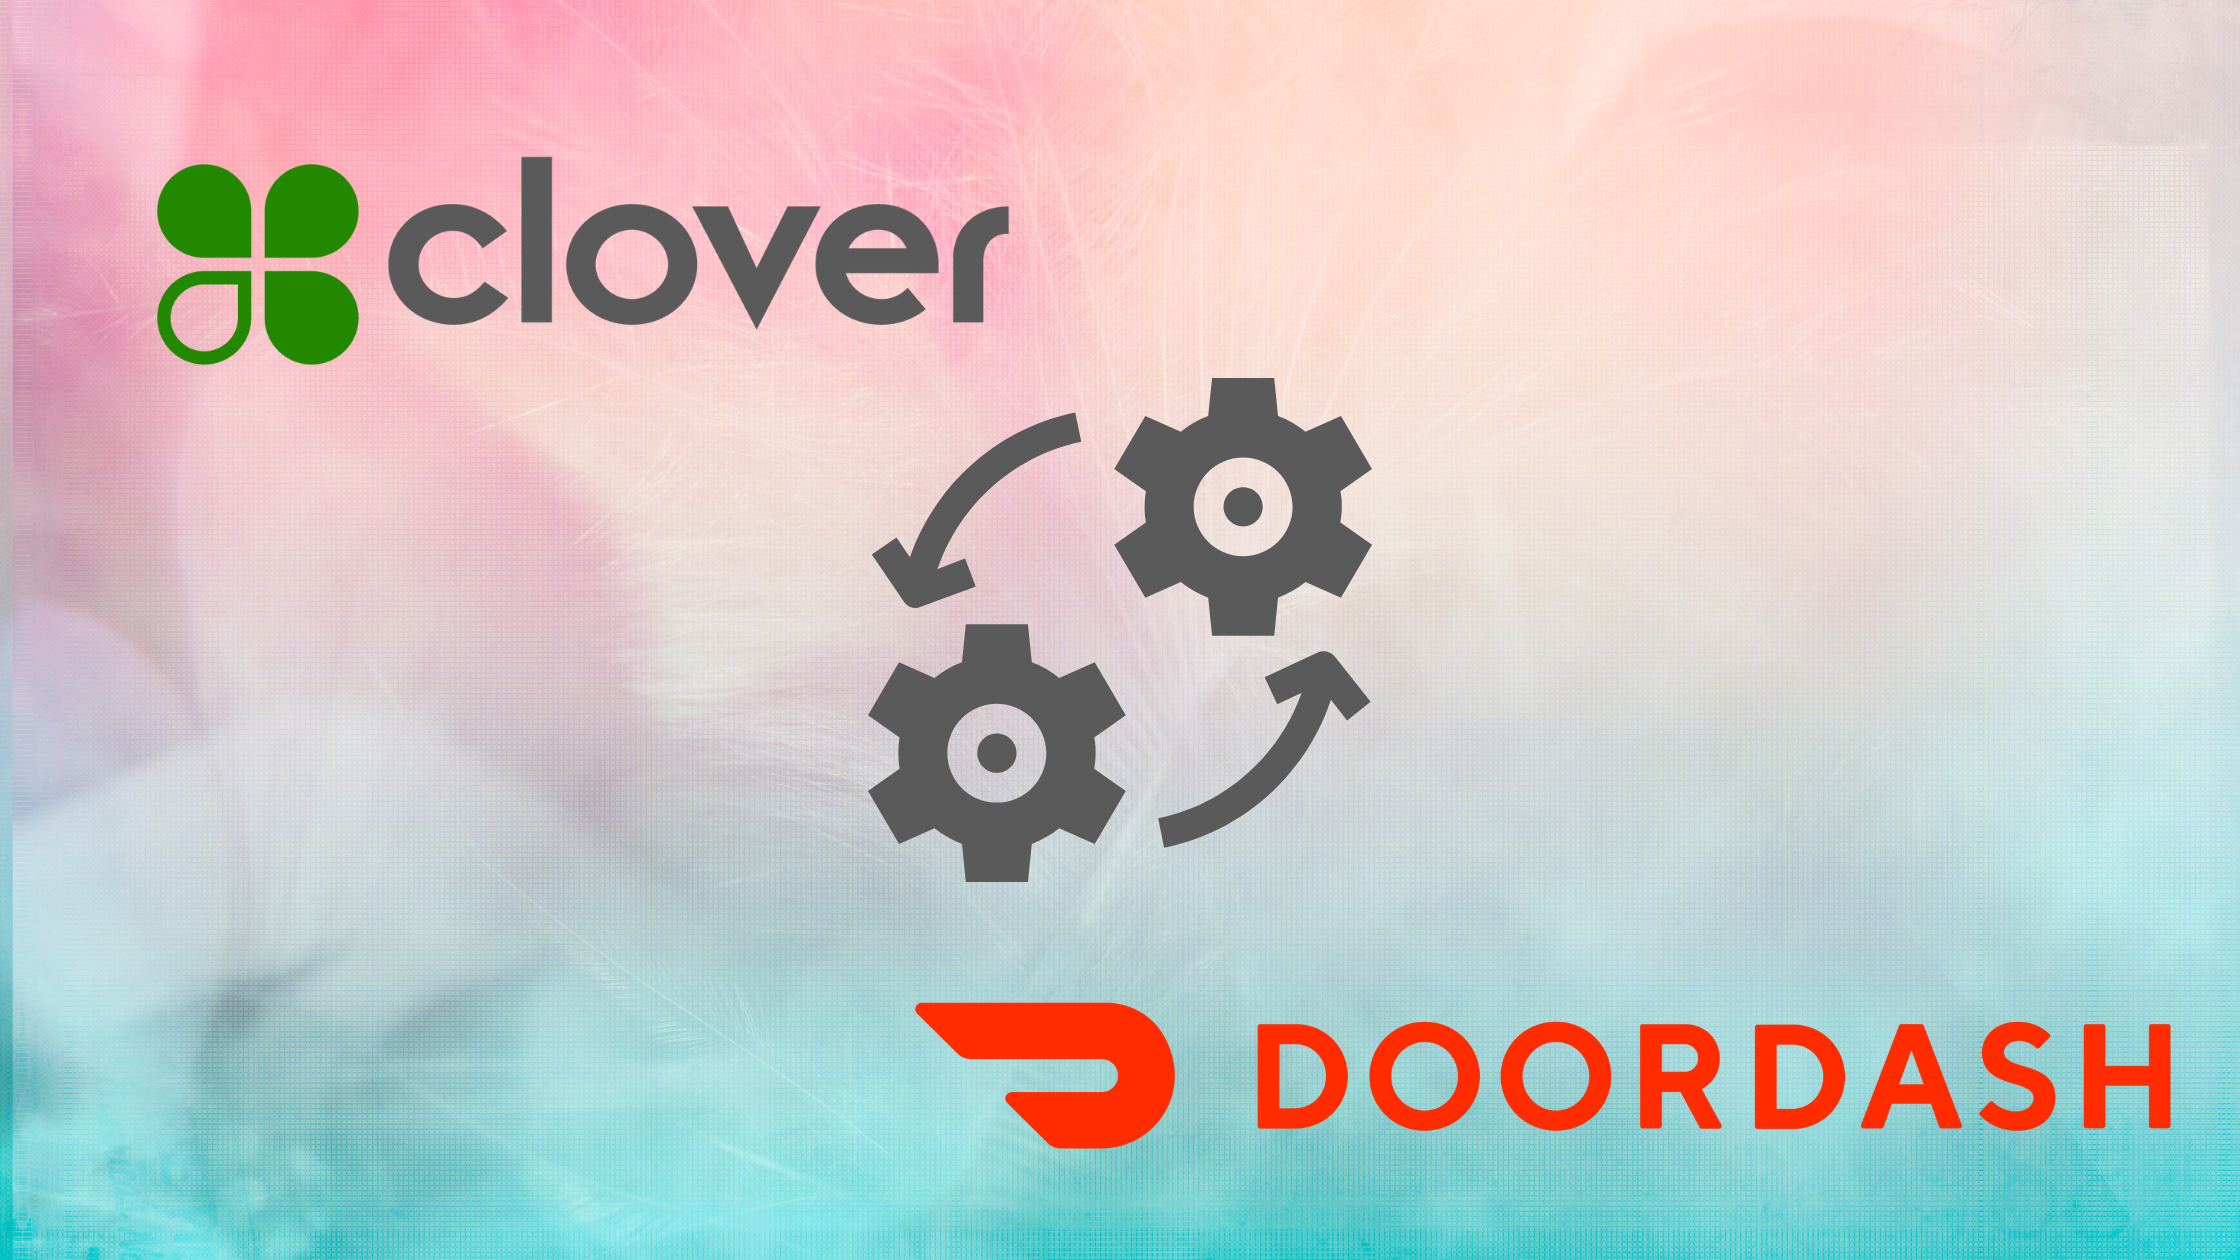 Get Started with the DoorDash Integration